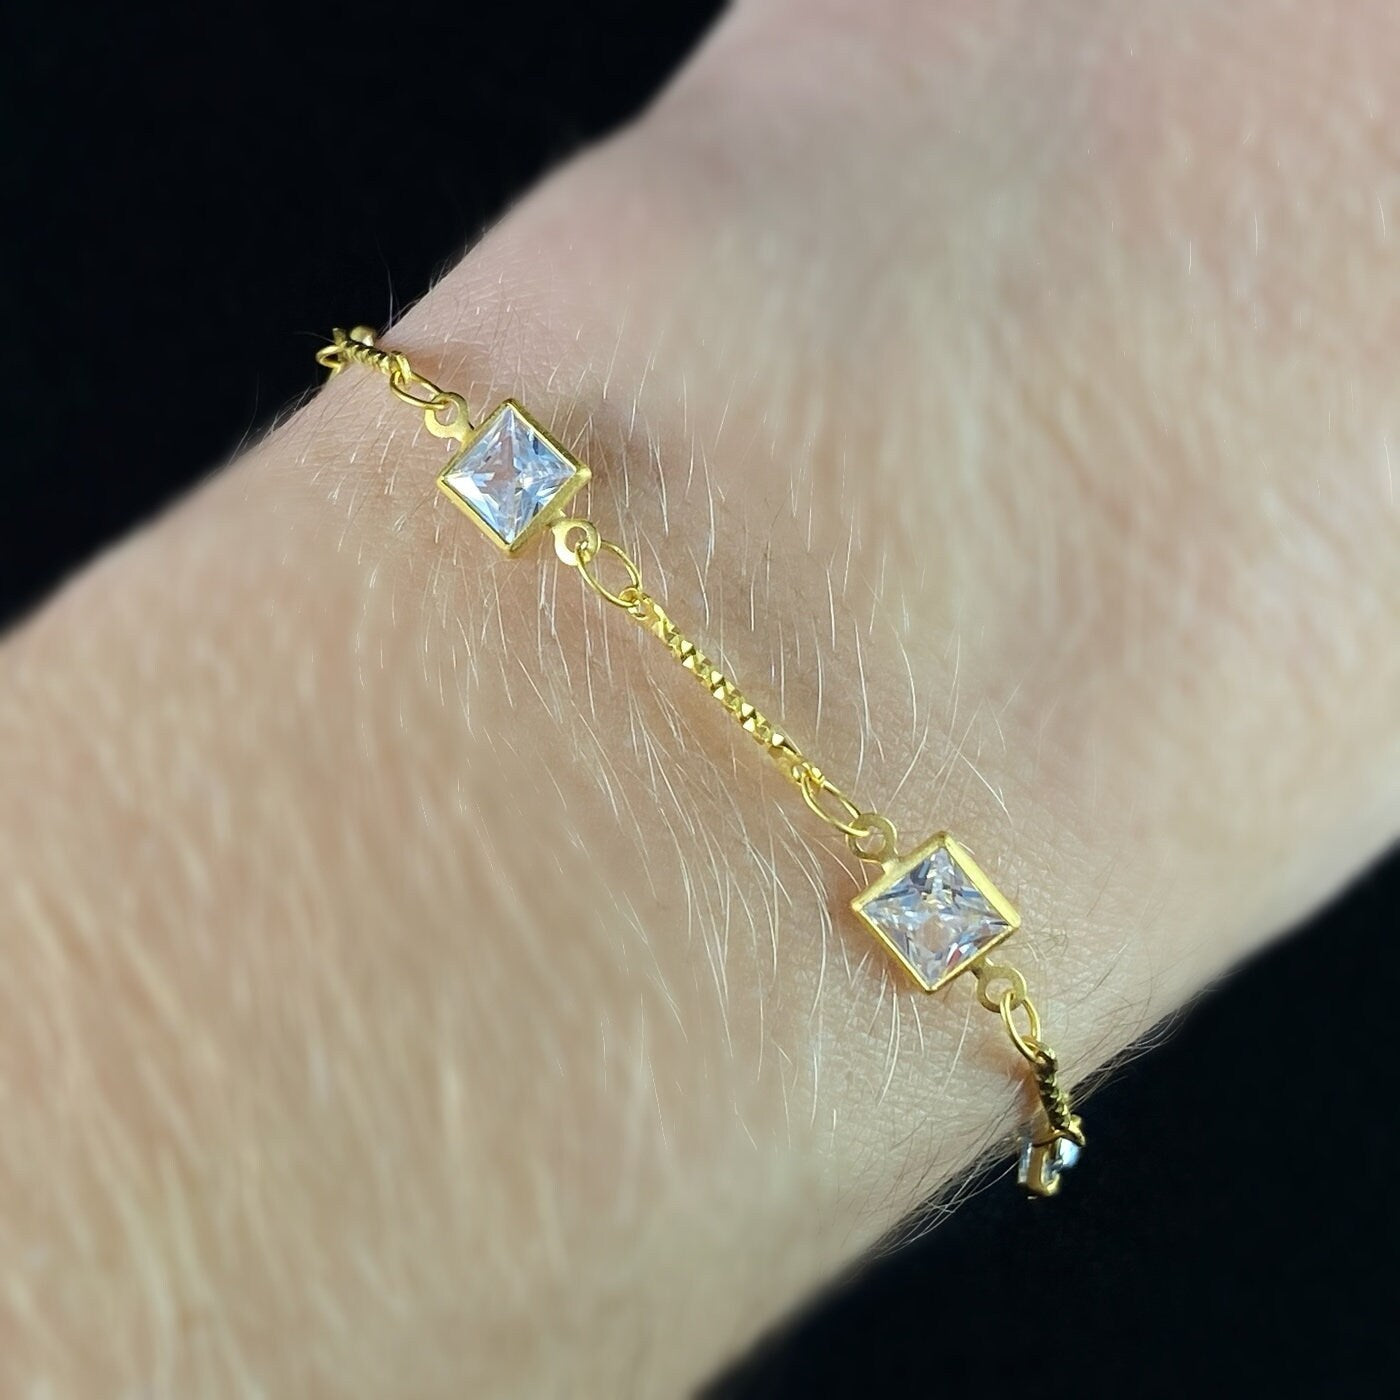 Dainty Gold Chain Bracelet with Square Cut Clear Swarovski Crystals - La Vie Parisienne by Catherine Popesco